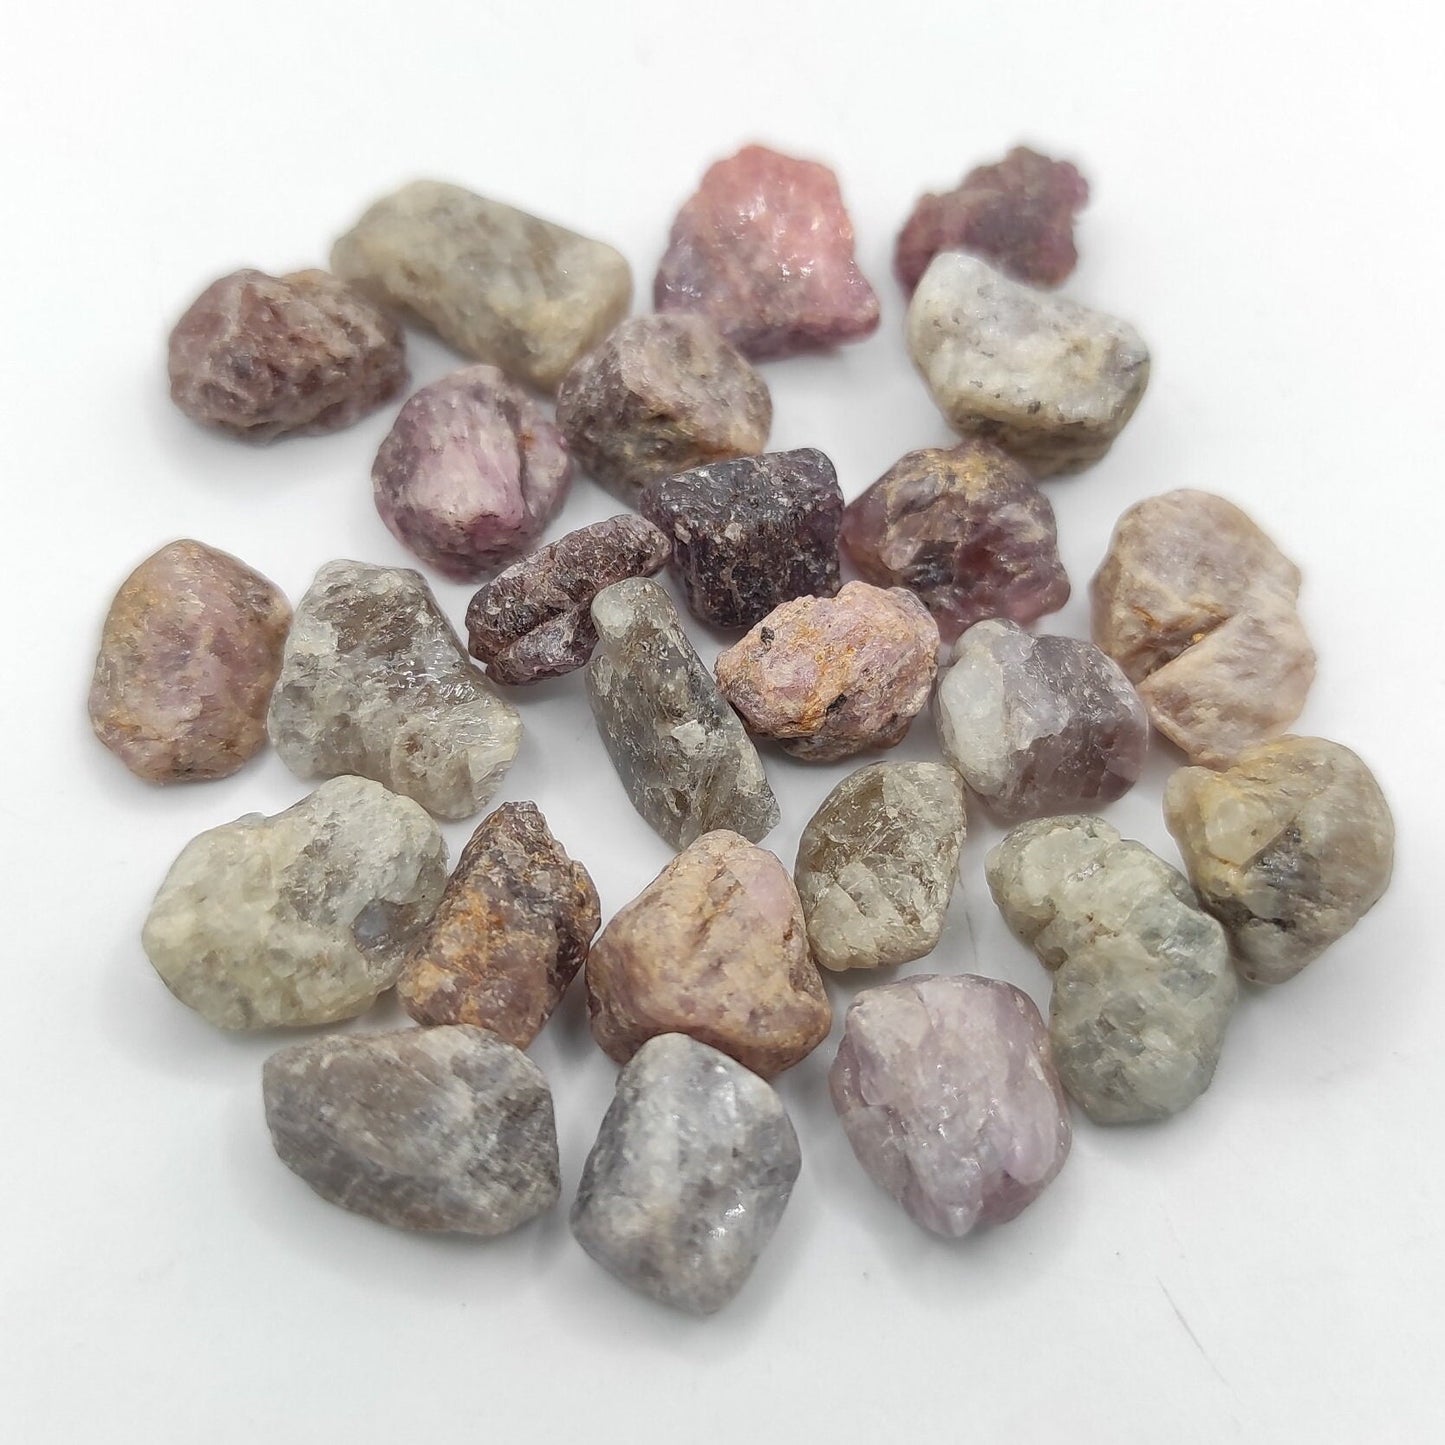 156ct Rough Sapphire Lot - Untreated & Unheated Sapphires - Rough Corundum Gems from Madagascar - Raw Sapphire Gemstones - Rough Gems